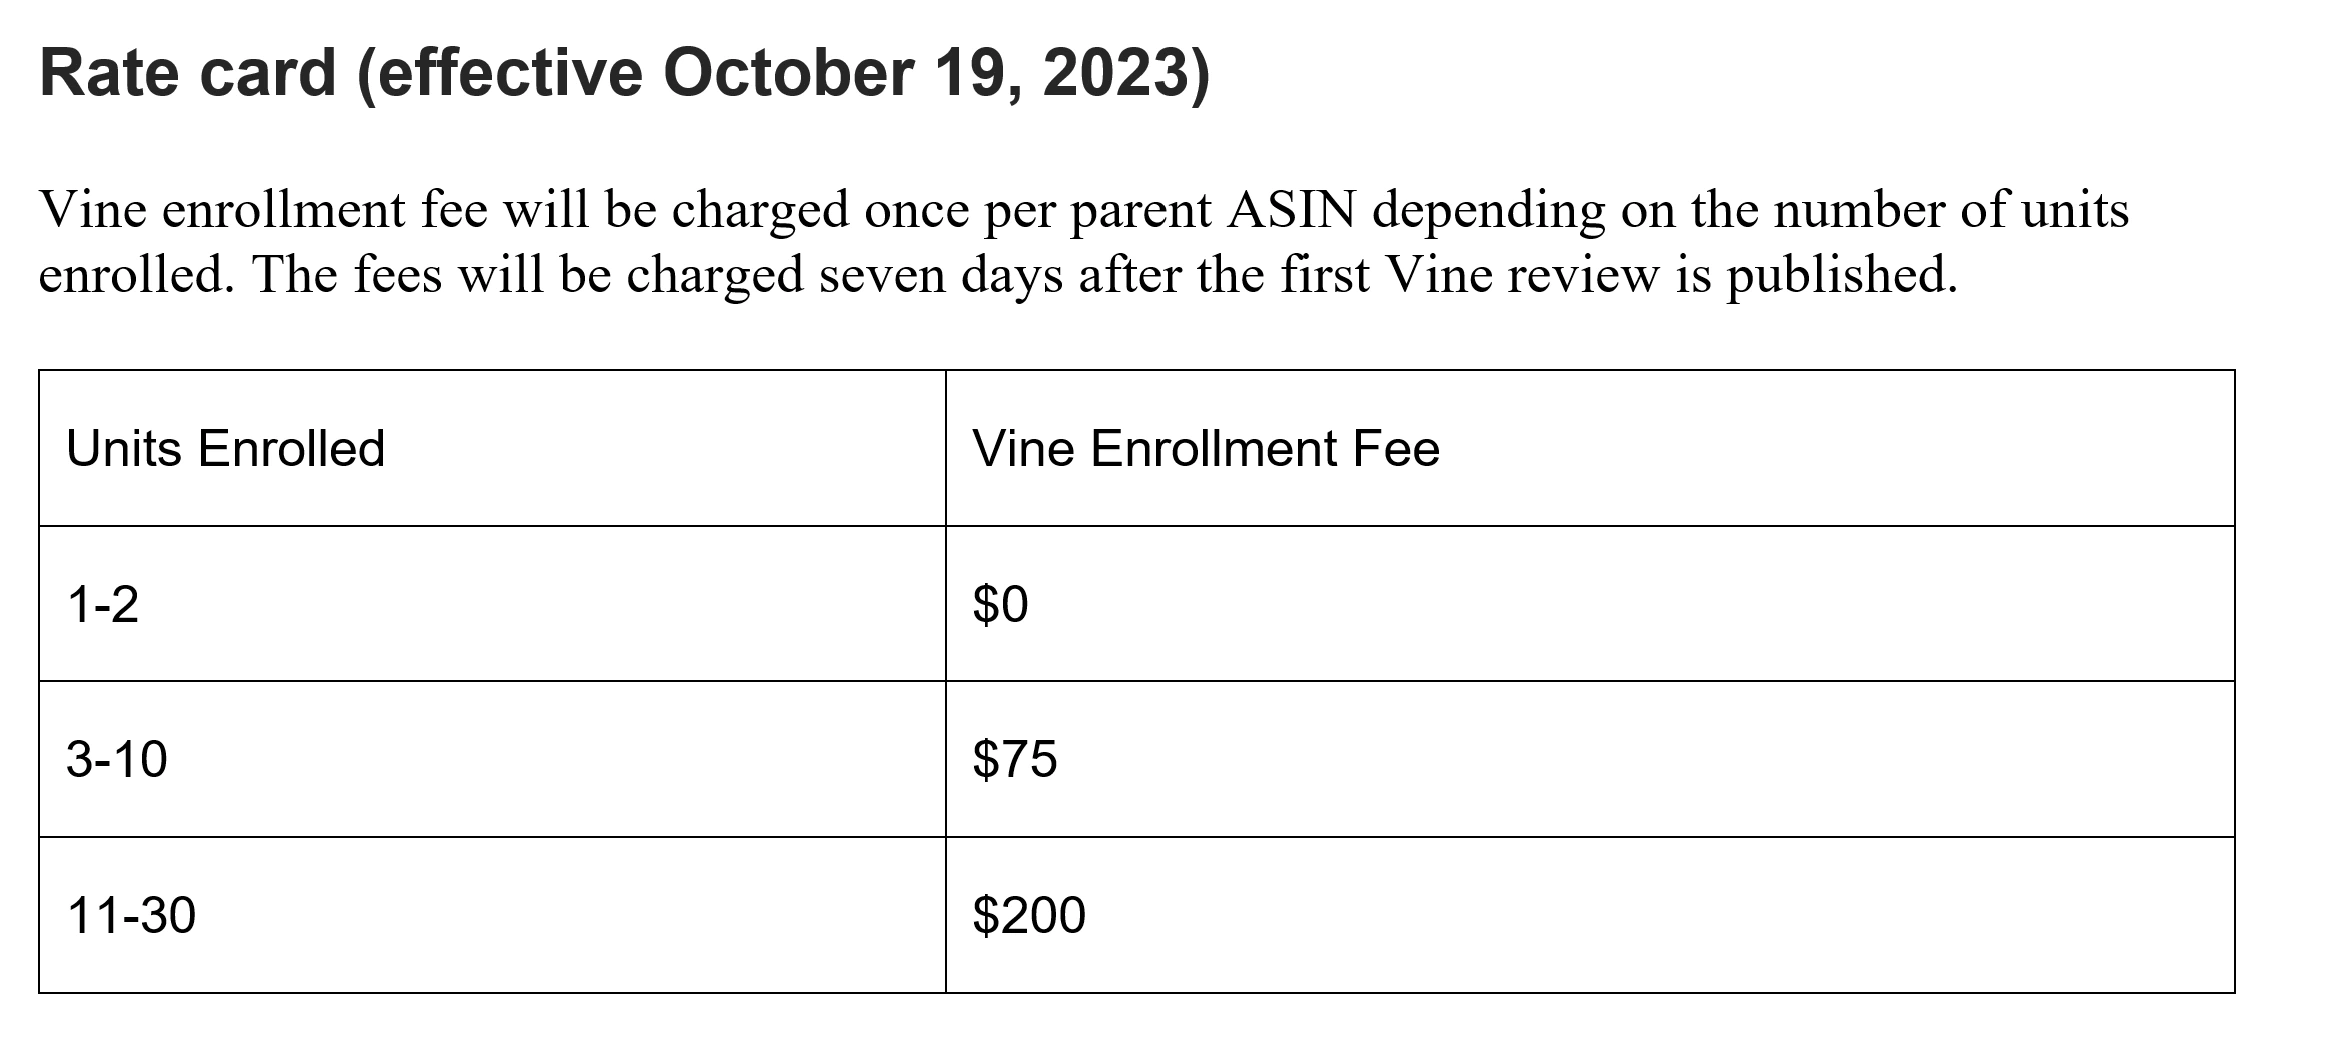 Vine enrollment fee